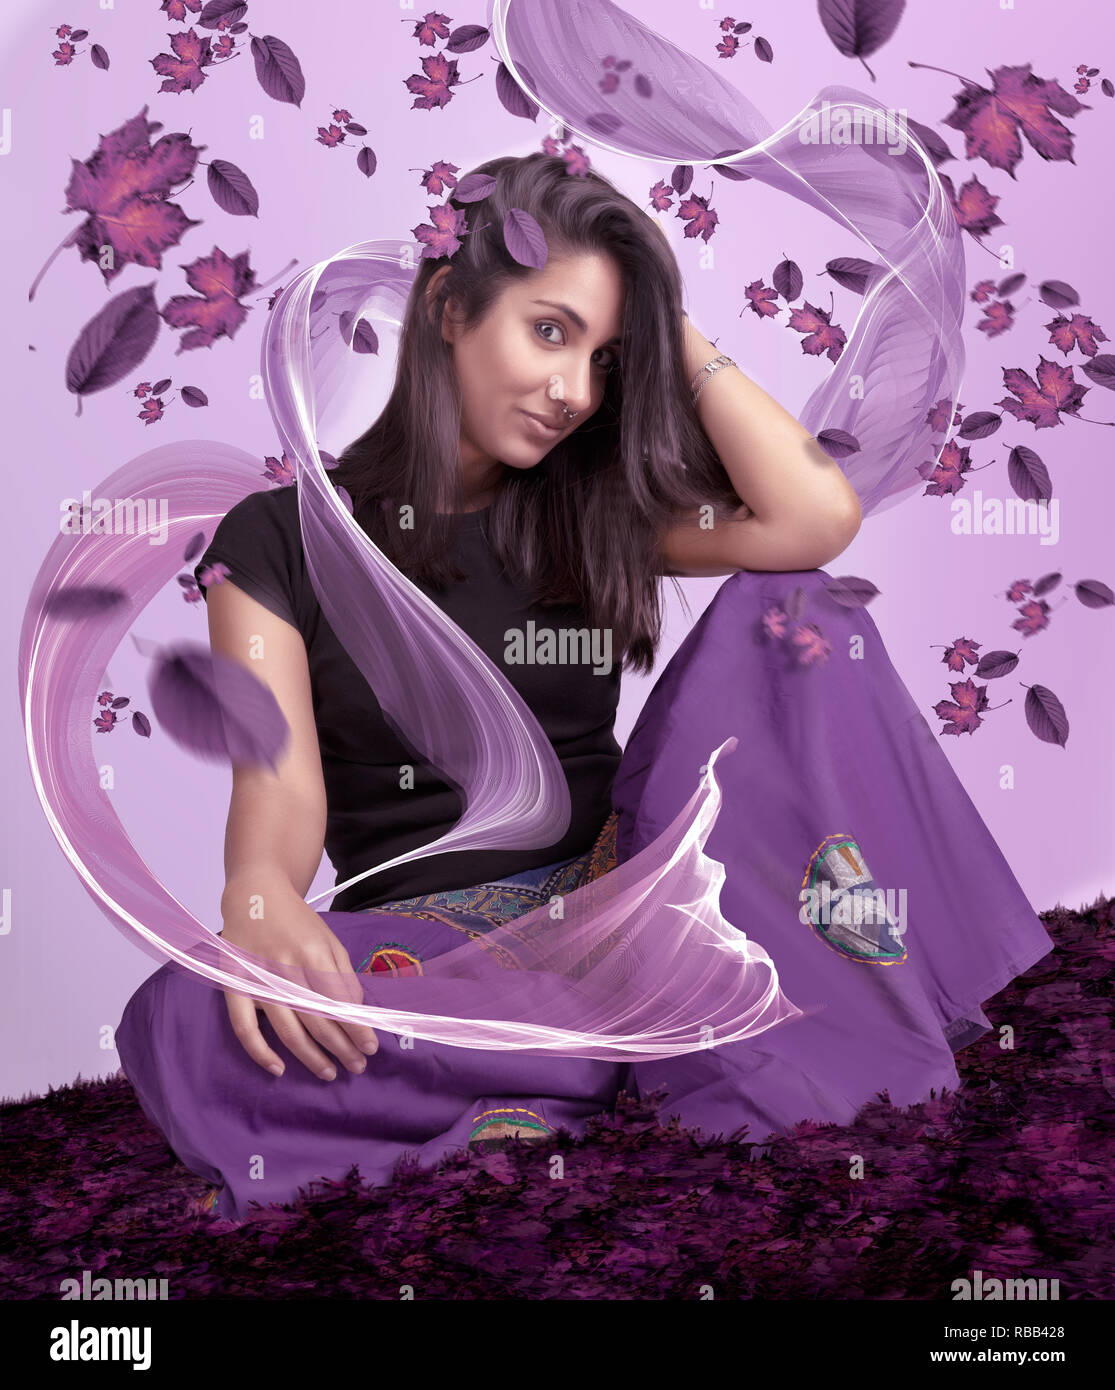 Arabian Nights with a pretty princess in purple. Stock Photo